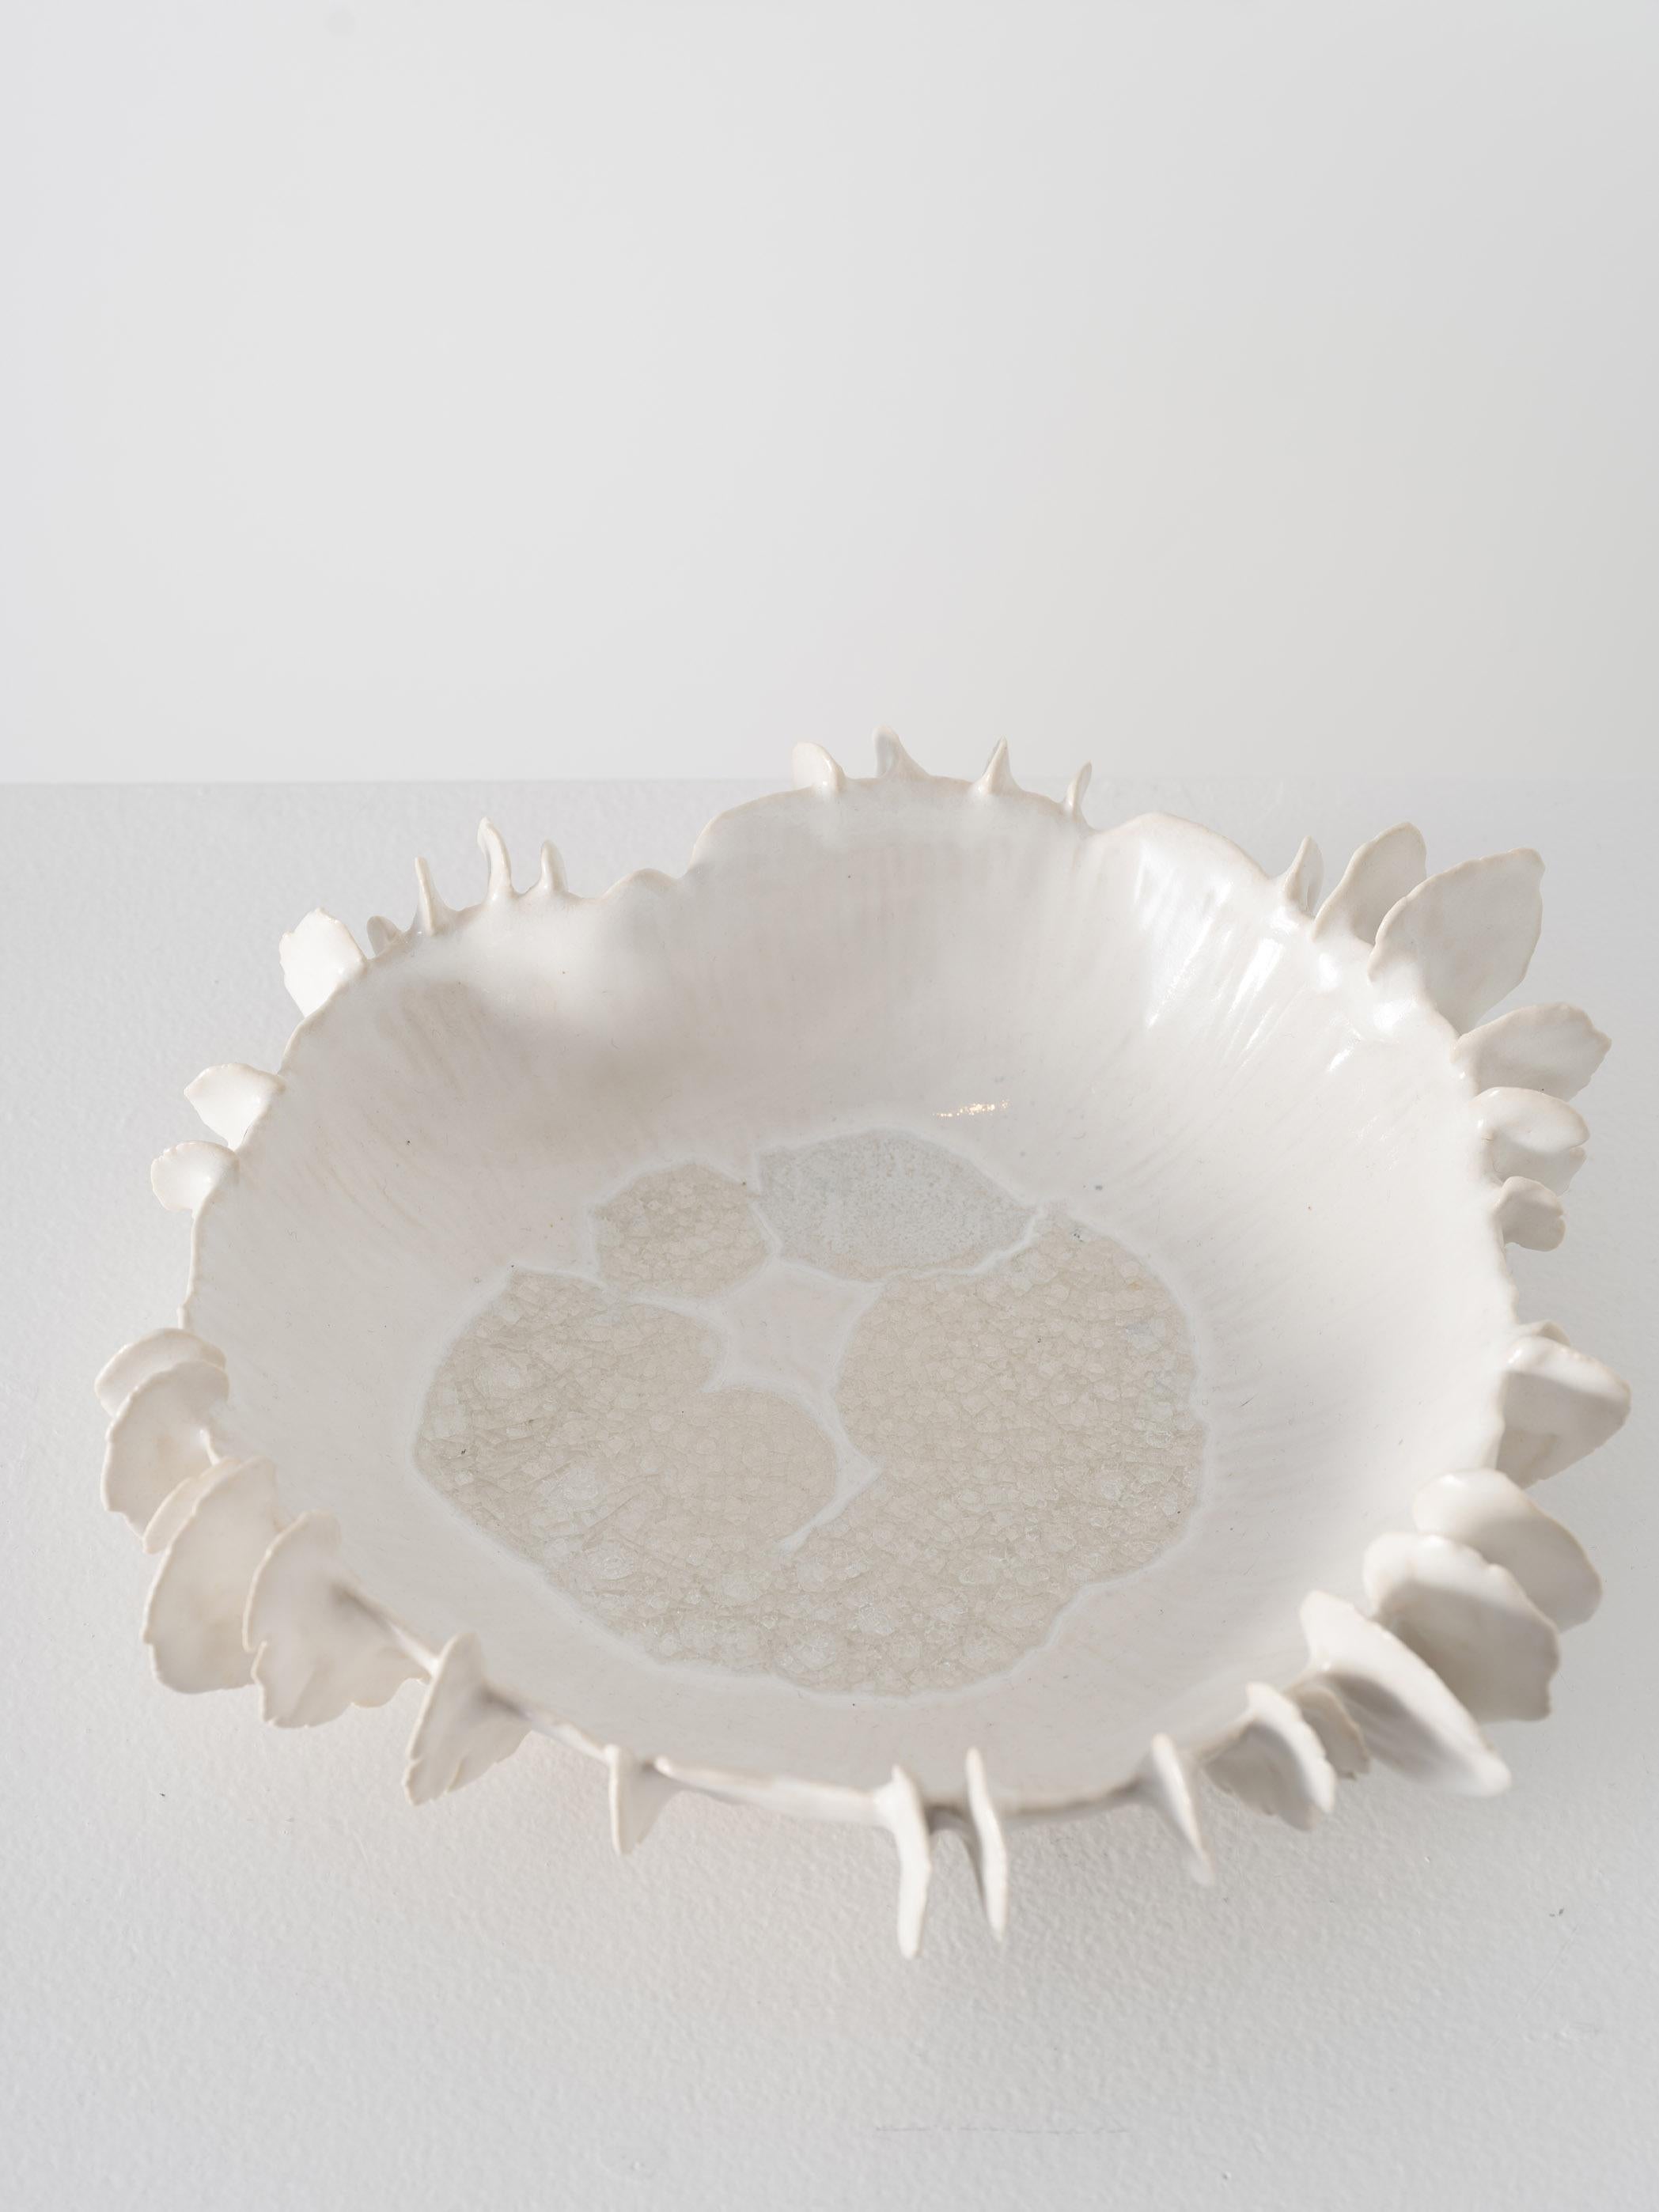 Trish DeMasi.
Lamella Bowl, 2022.
Glazed ceramic with glass inlay.
Measures: 3 x 10.5 x 10 in.